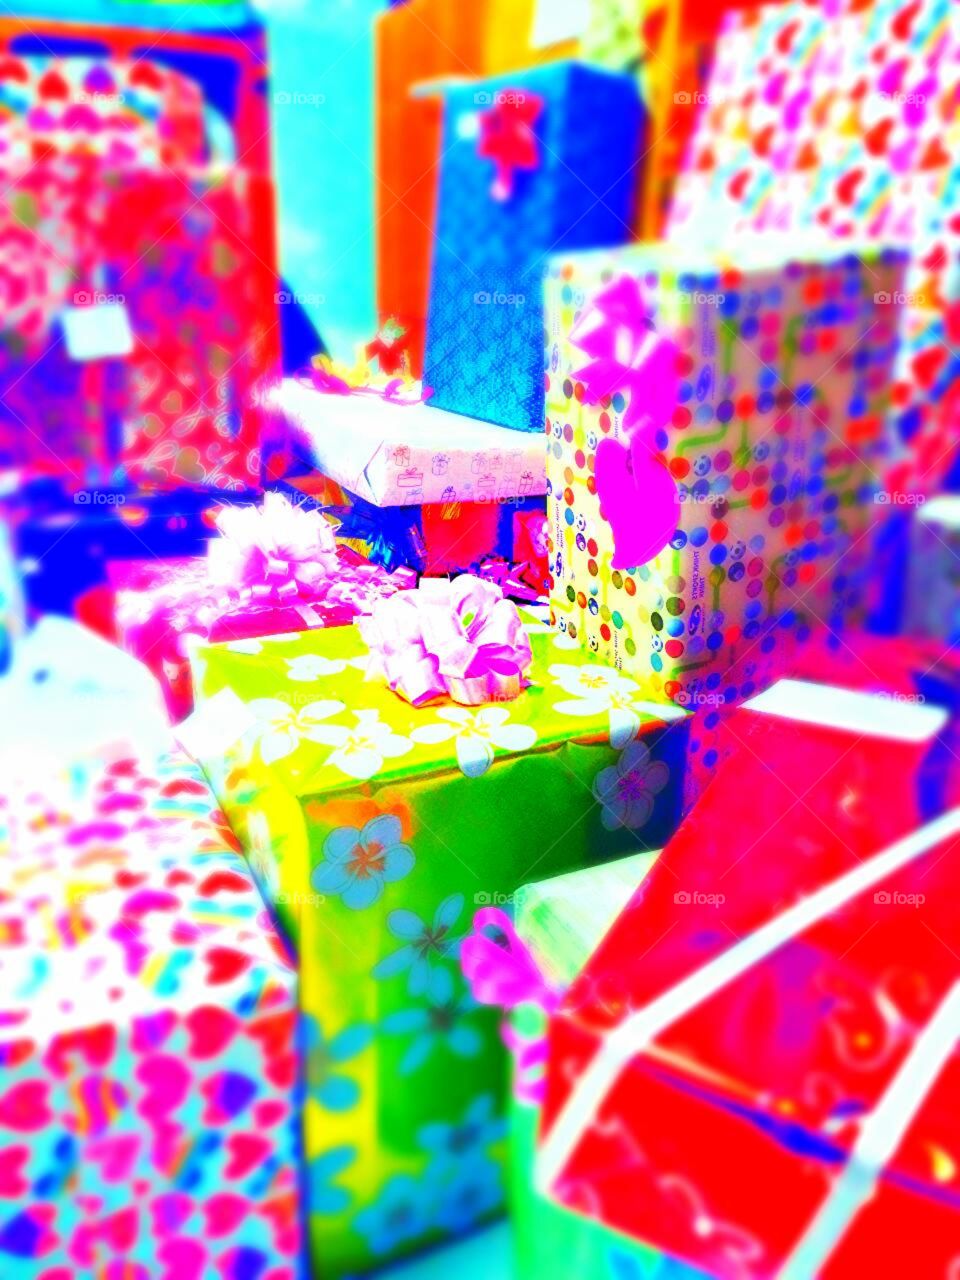 gifts #present #Xmas #new year #joyful